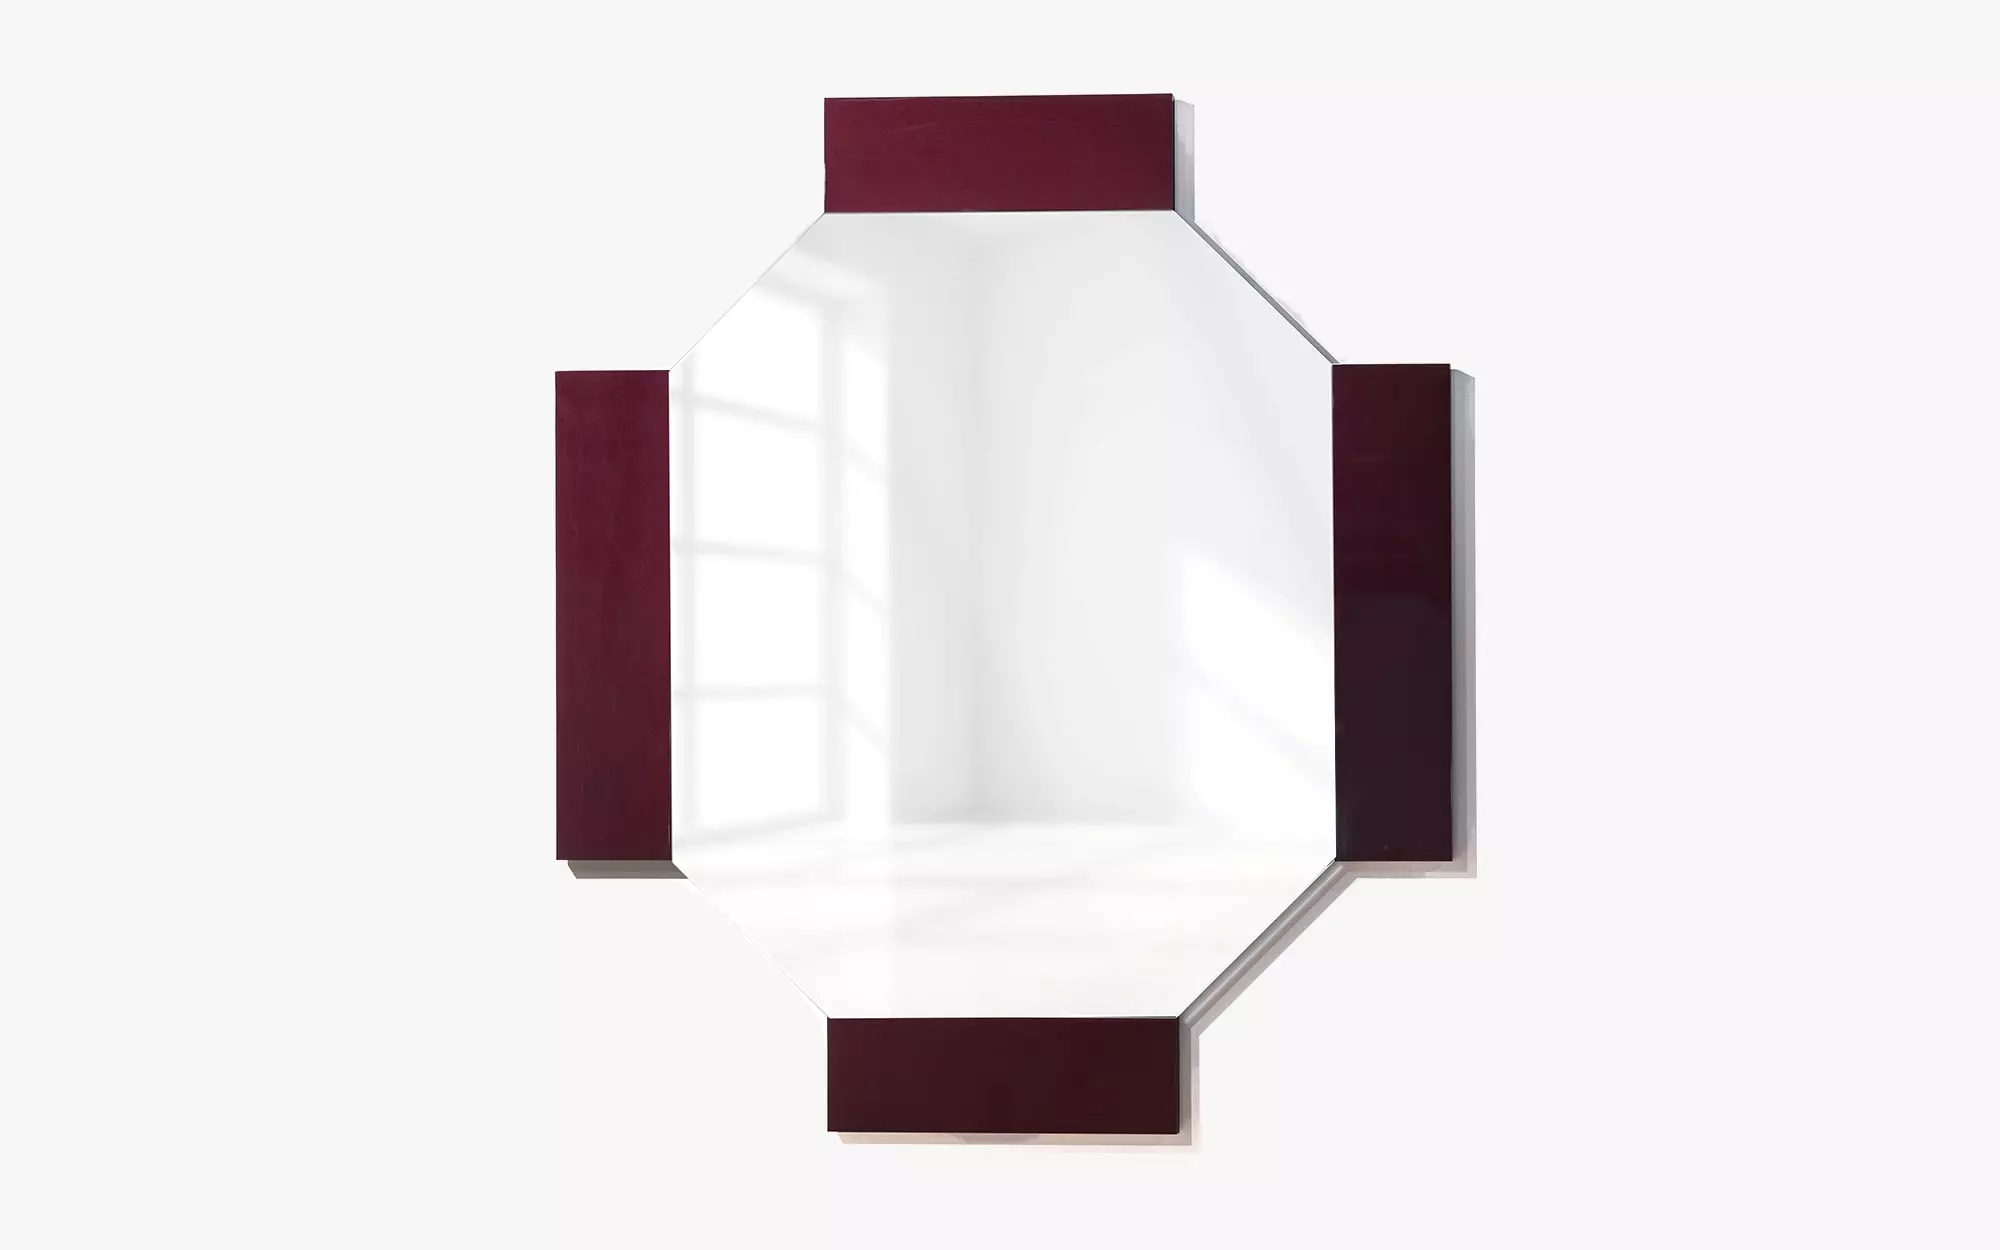 Satellite 4 Mirror - Pierre Charpin - Floor light - Galerie kreo